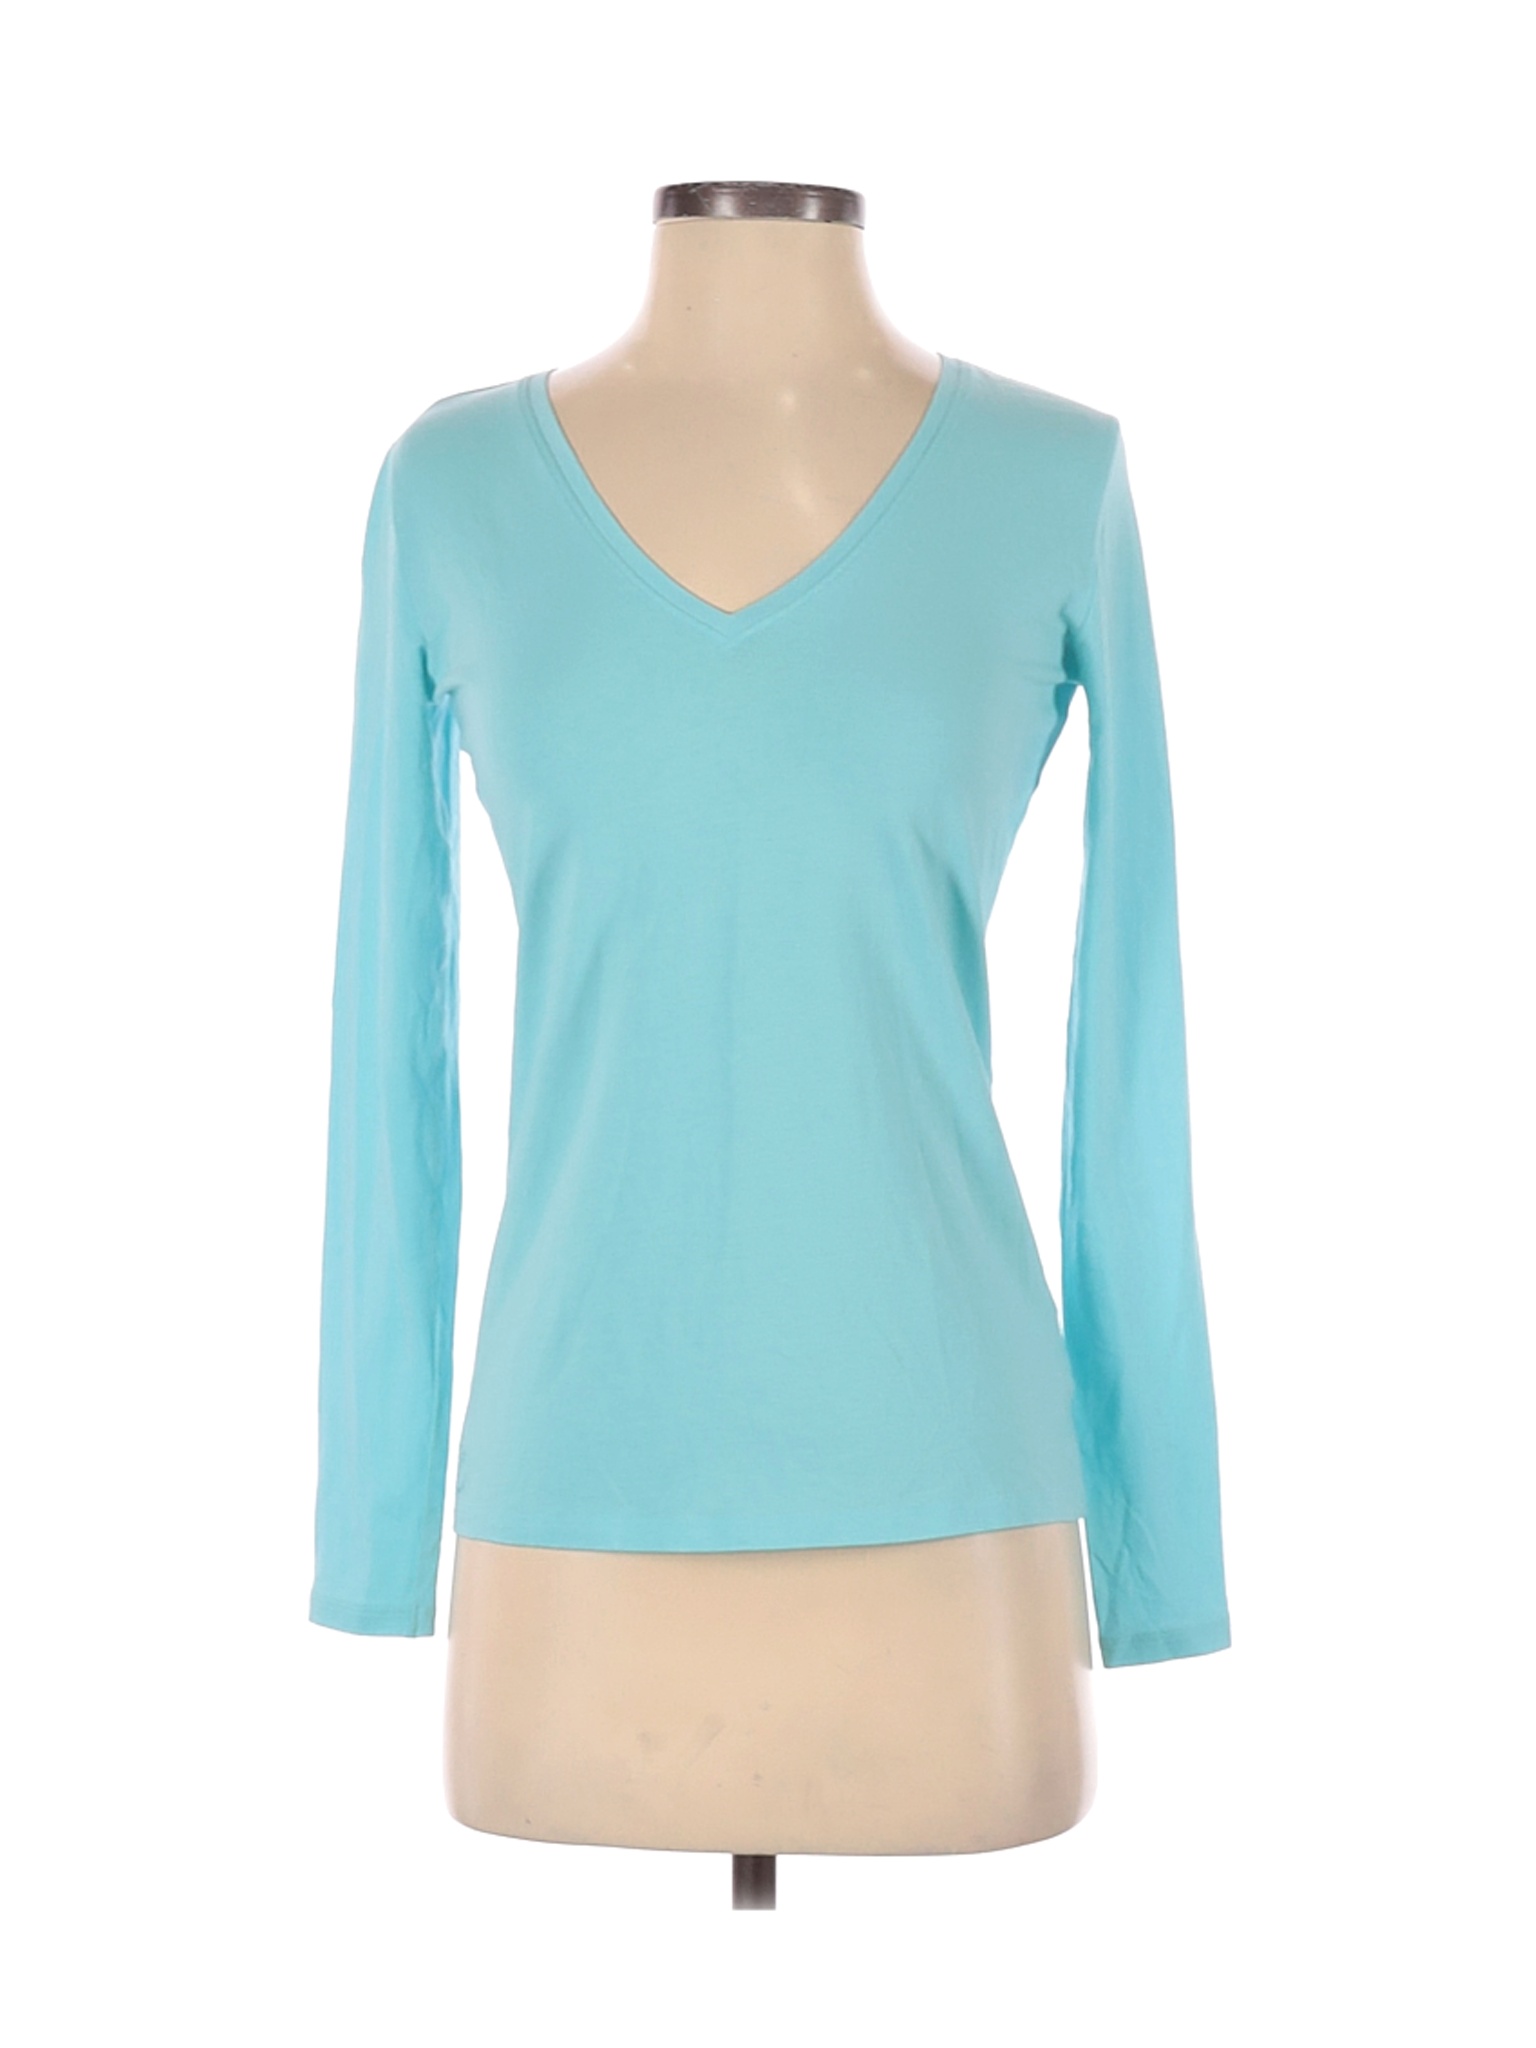 Lilly Pulitzer Women Blue Long Sleeve T-Shirt XS | eBay